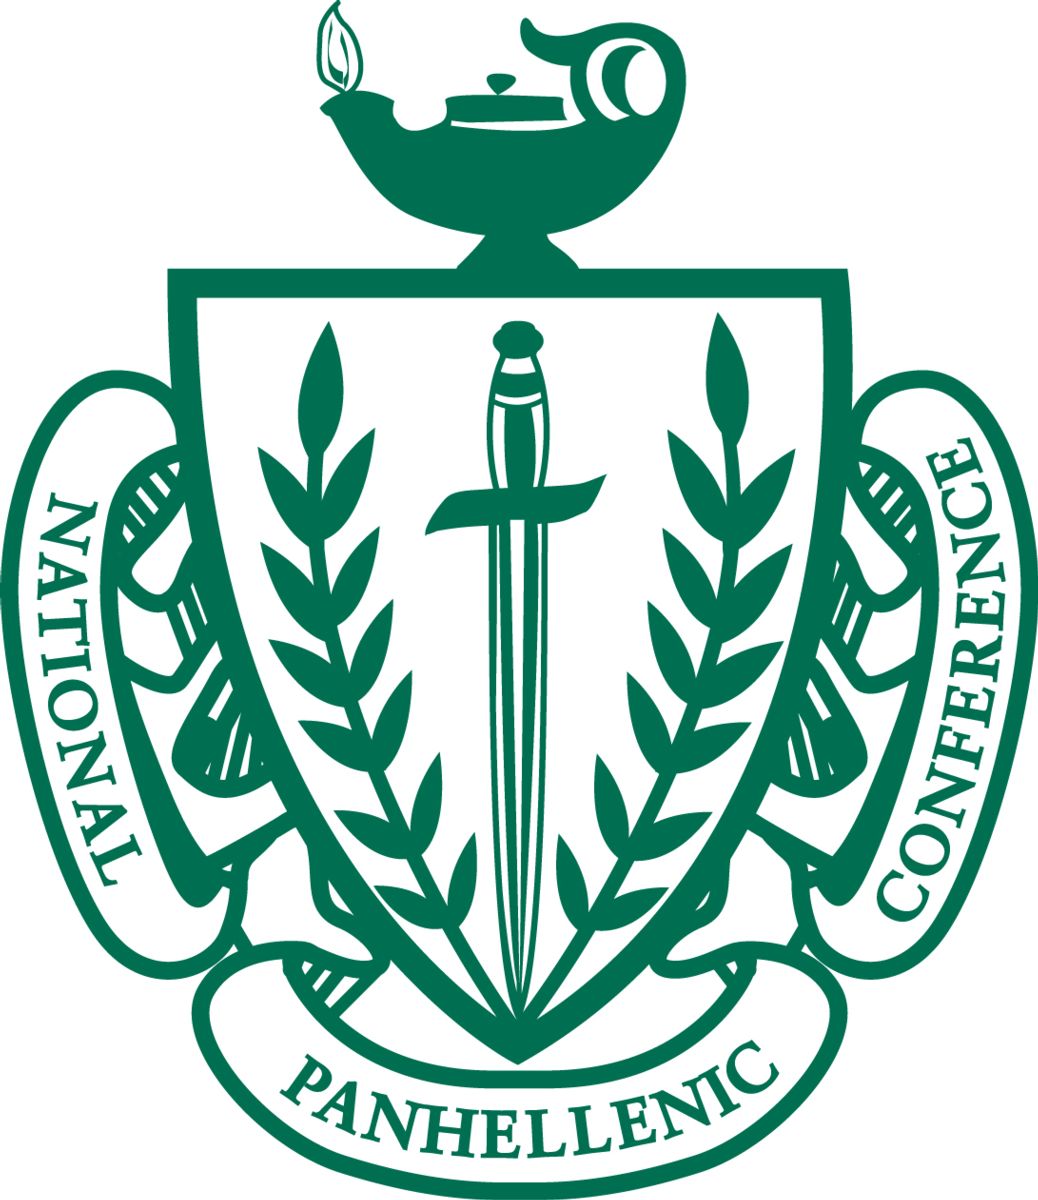 Panhellenic National Logo